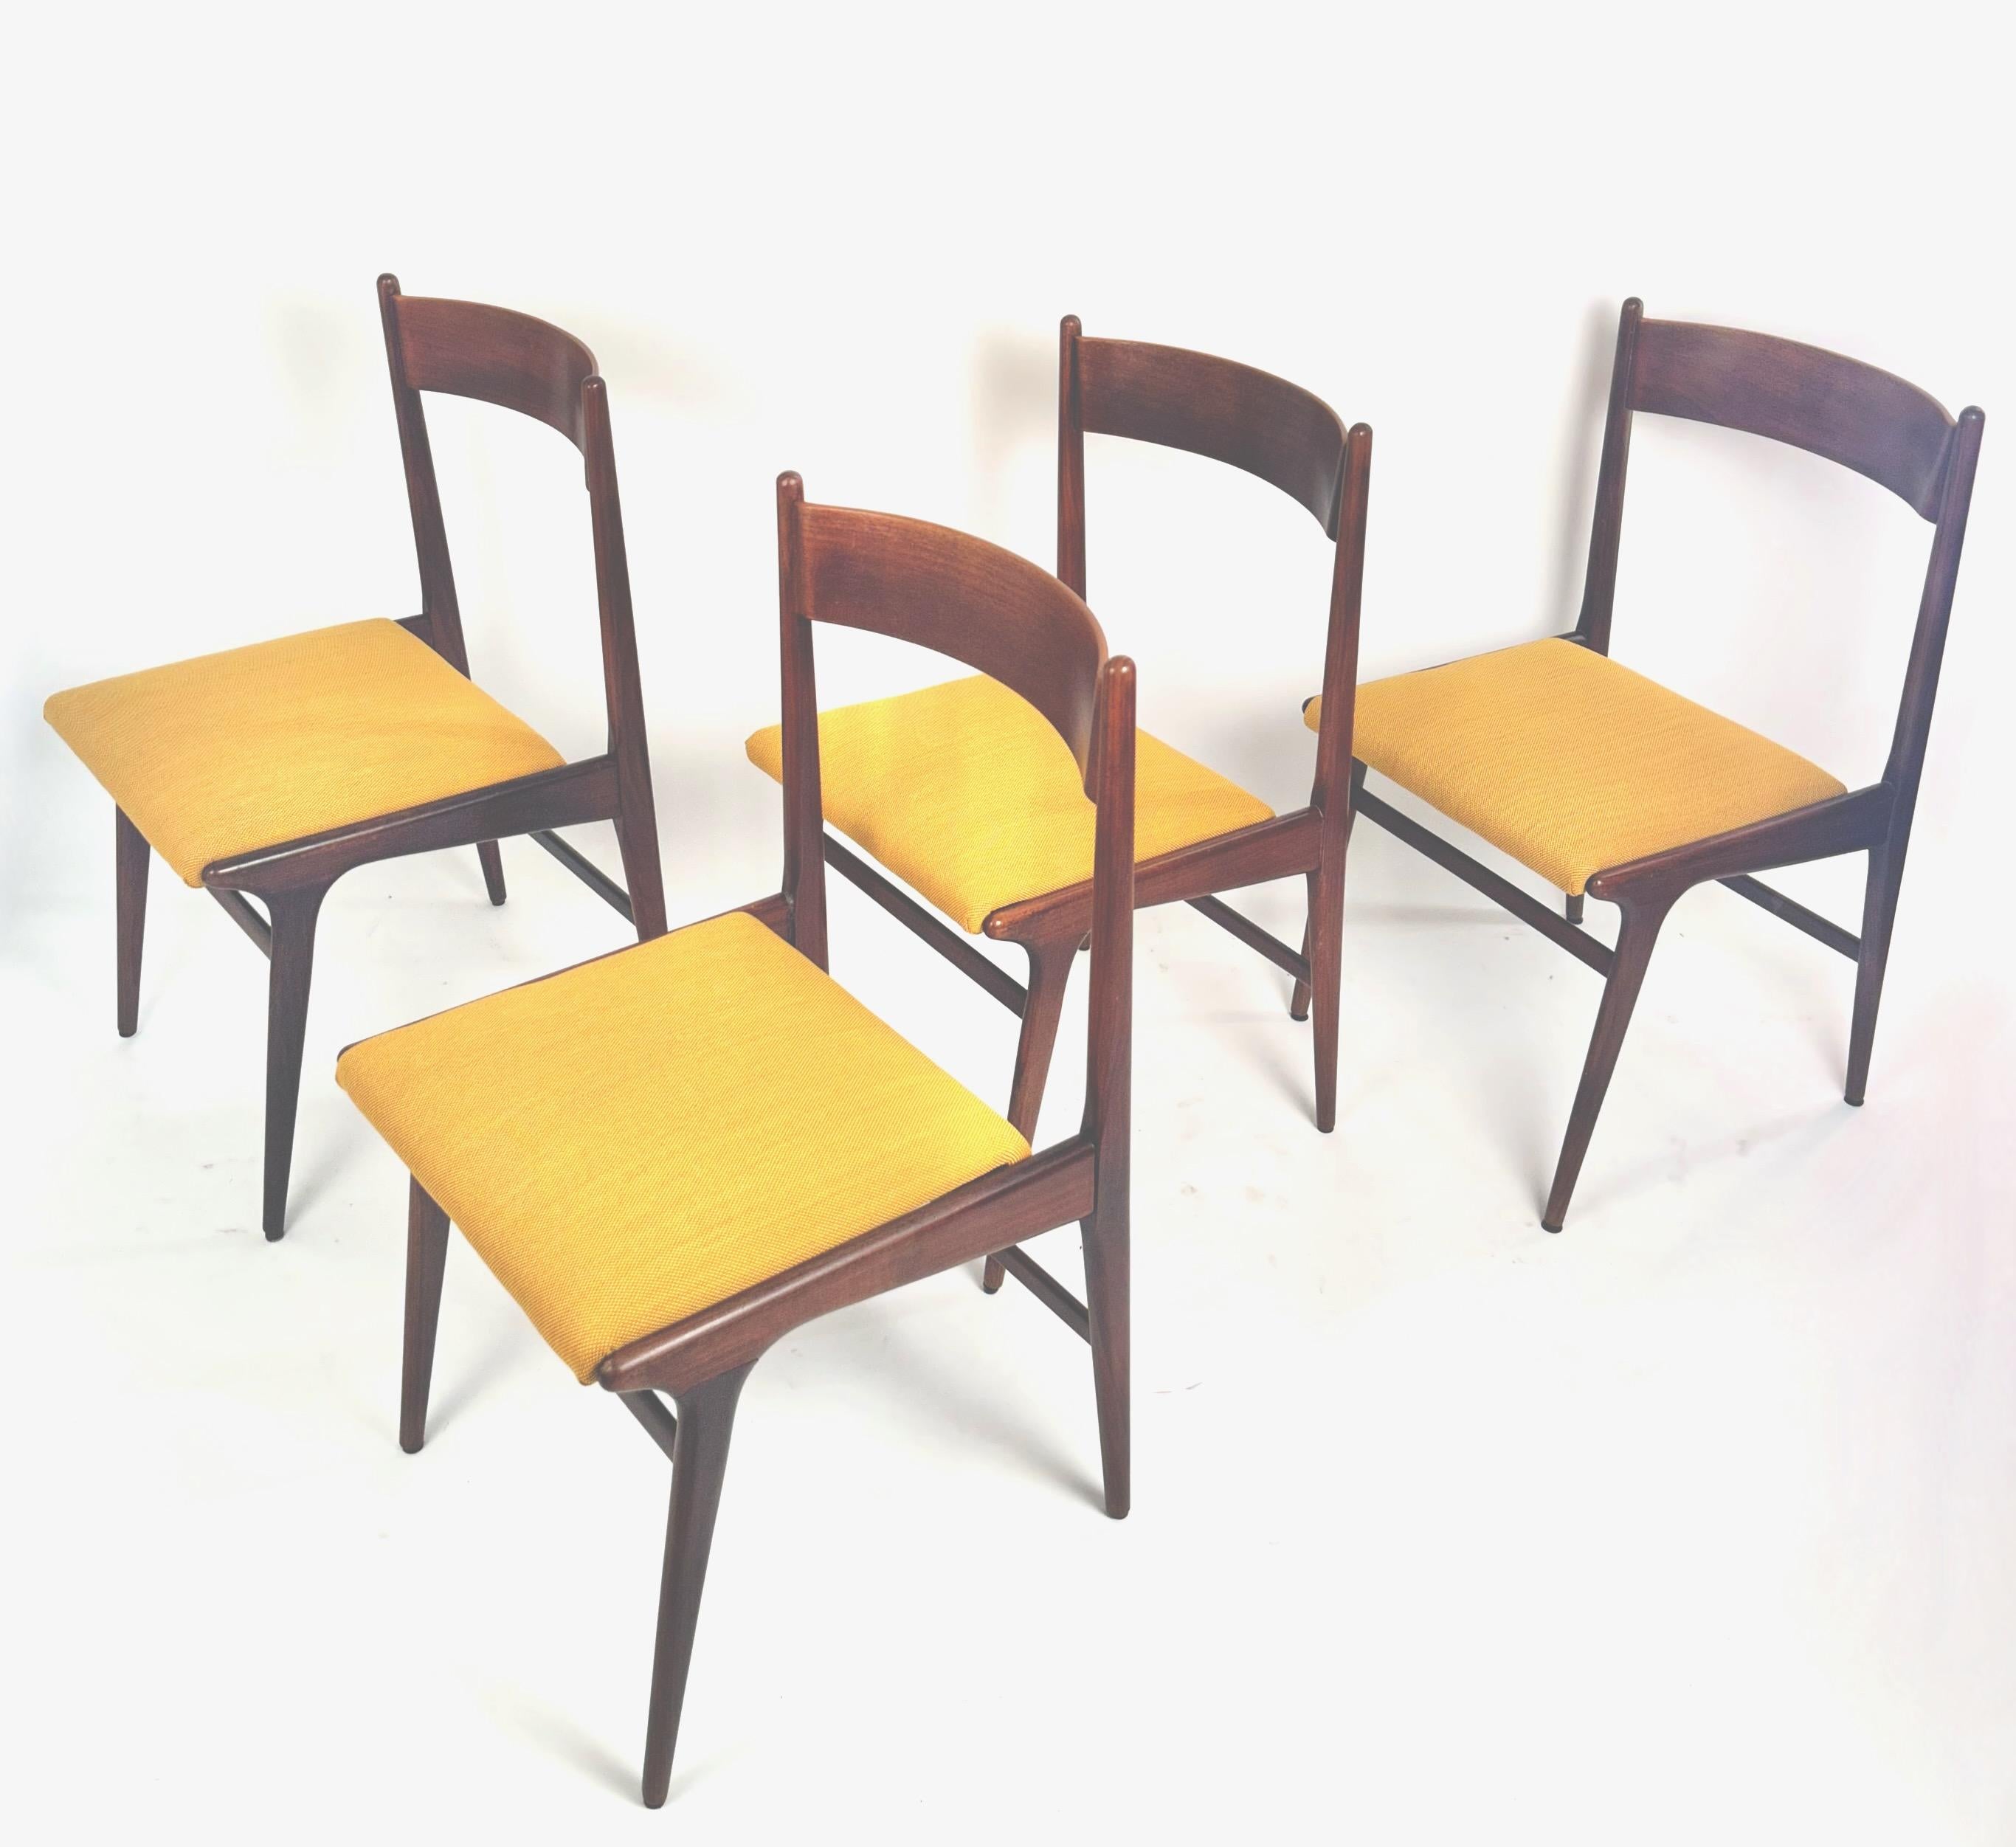 Carlo de Carli MidSet of Four Teak Dining Chairs in Kvadrat Yello Fabric, 1960s For Sale 8